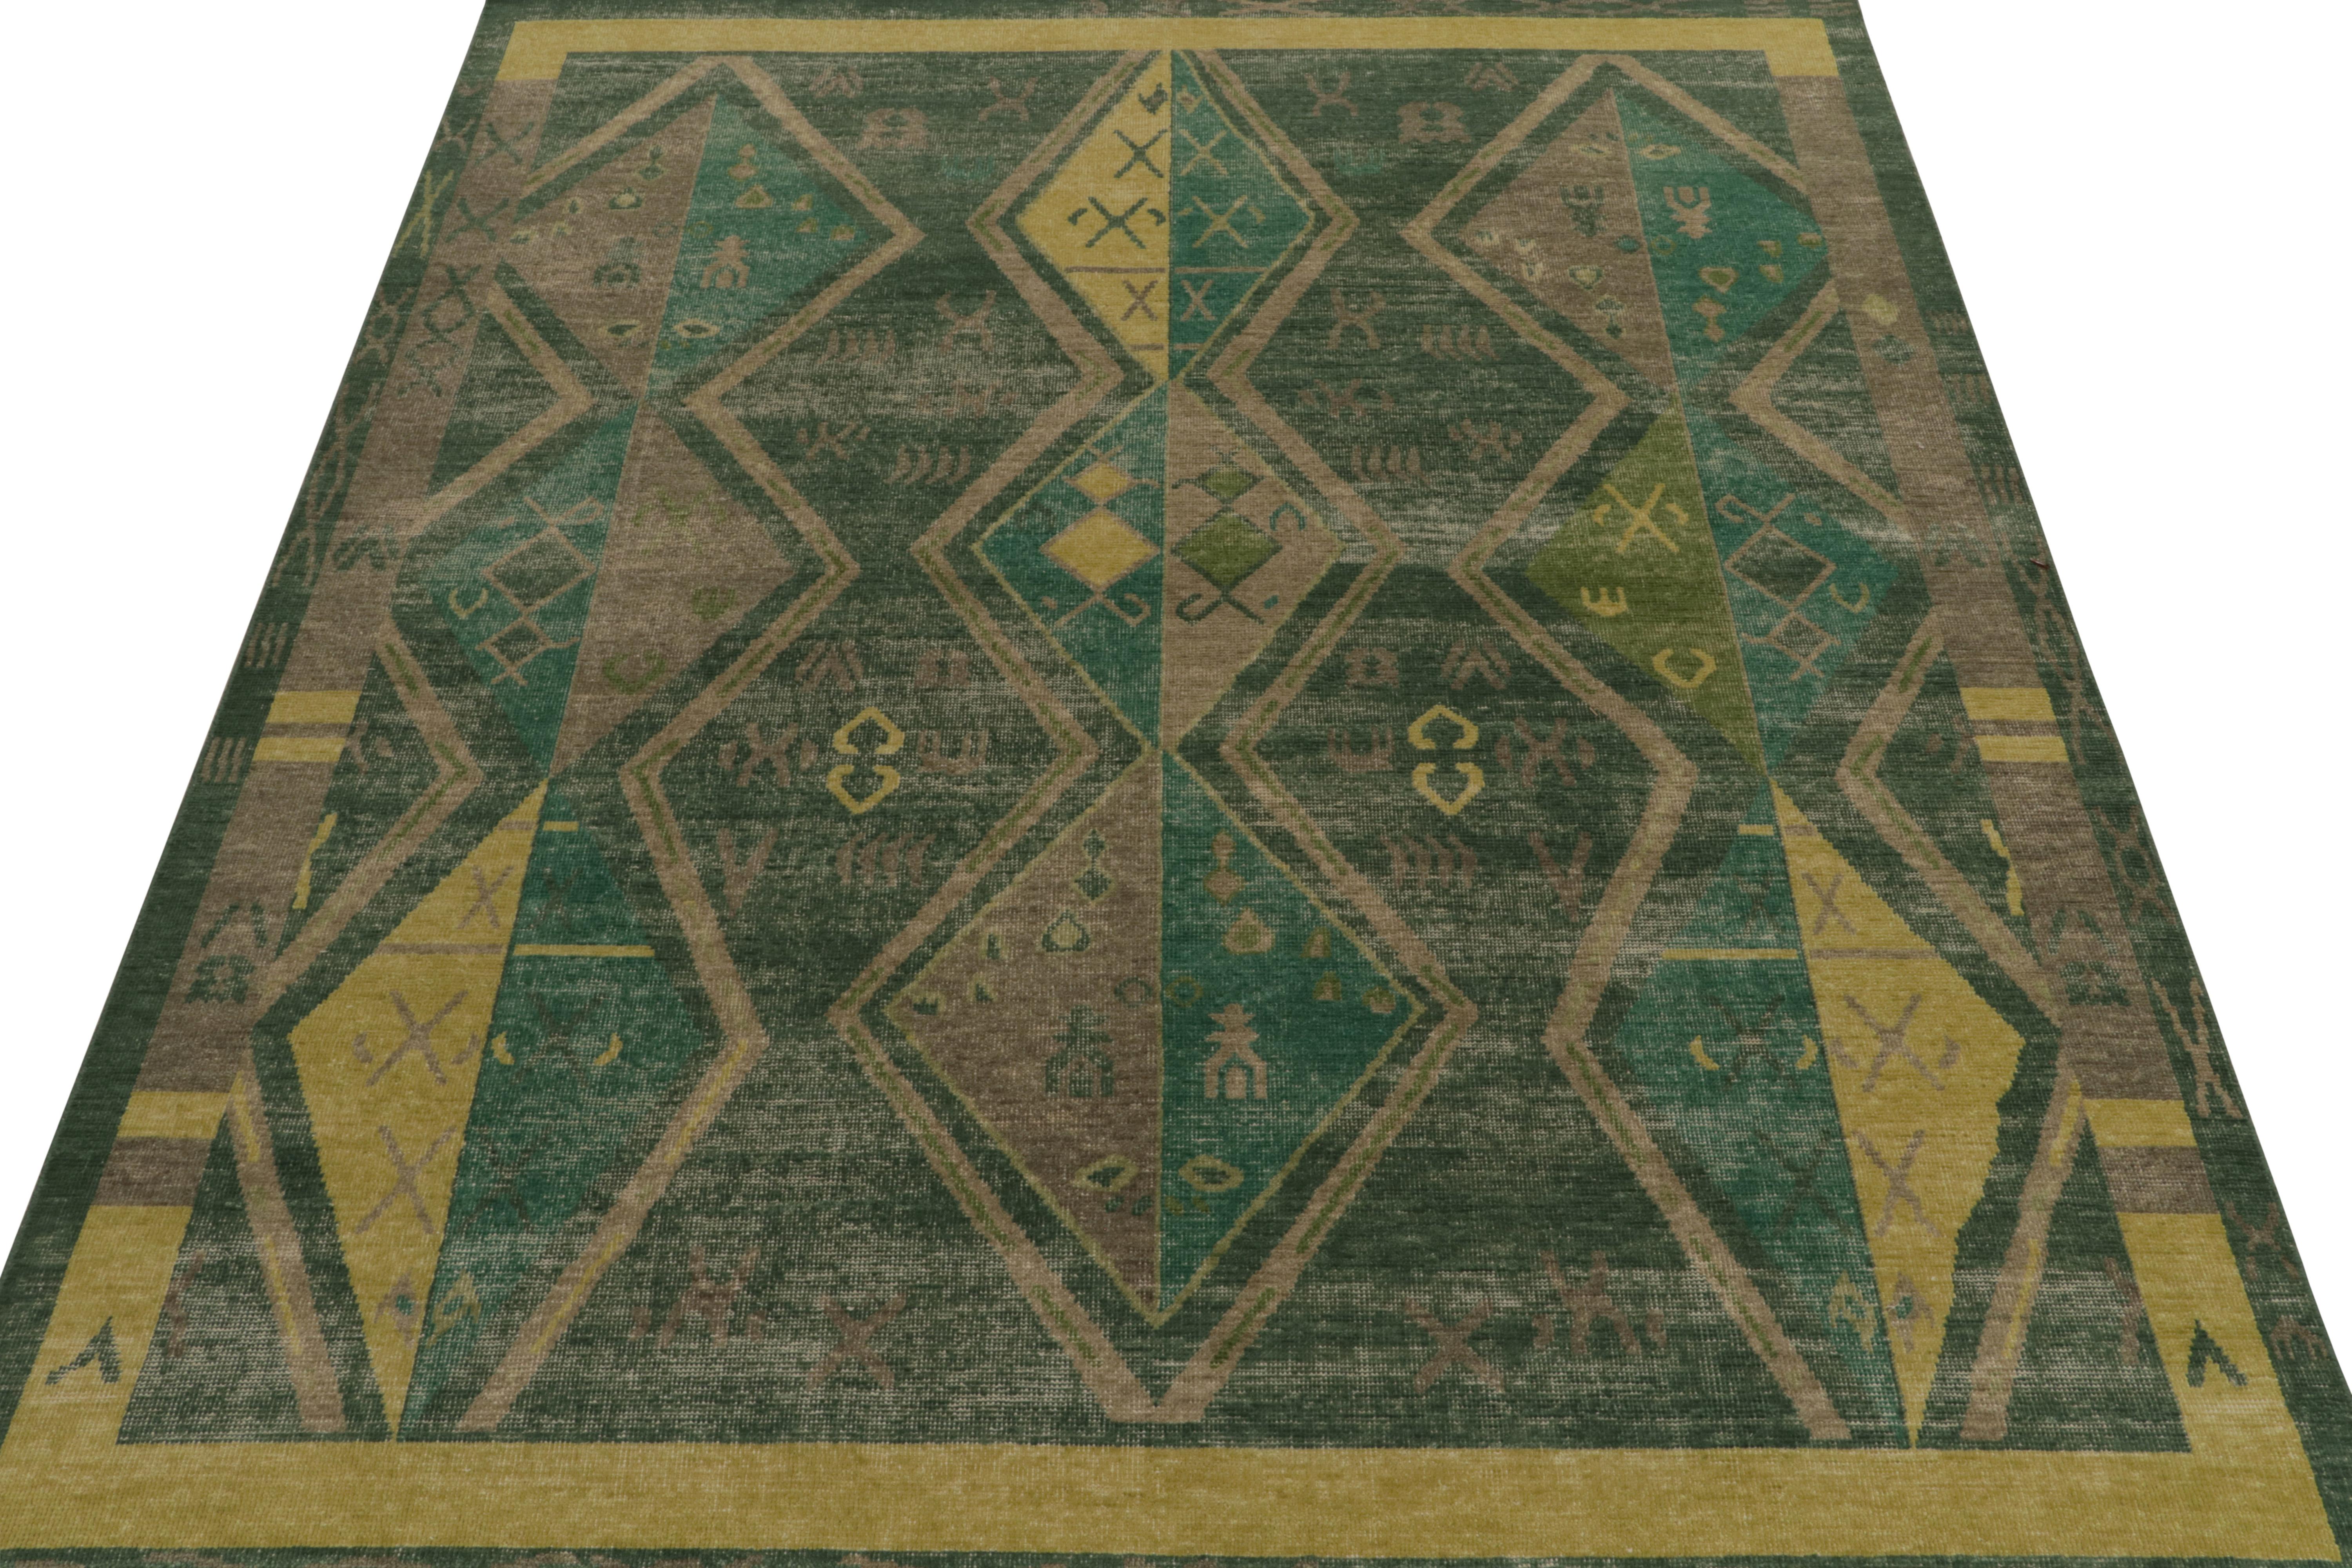 Indien Rug & Kilim's Distressed Style Rug in Green & Brown Geometric Patterns (tapis à motifs géométriques verts et bruns) en vente